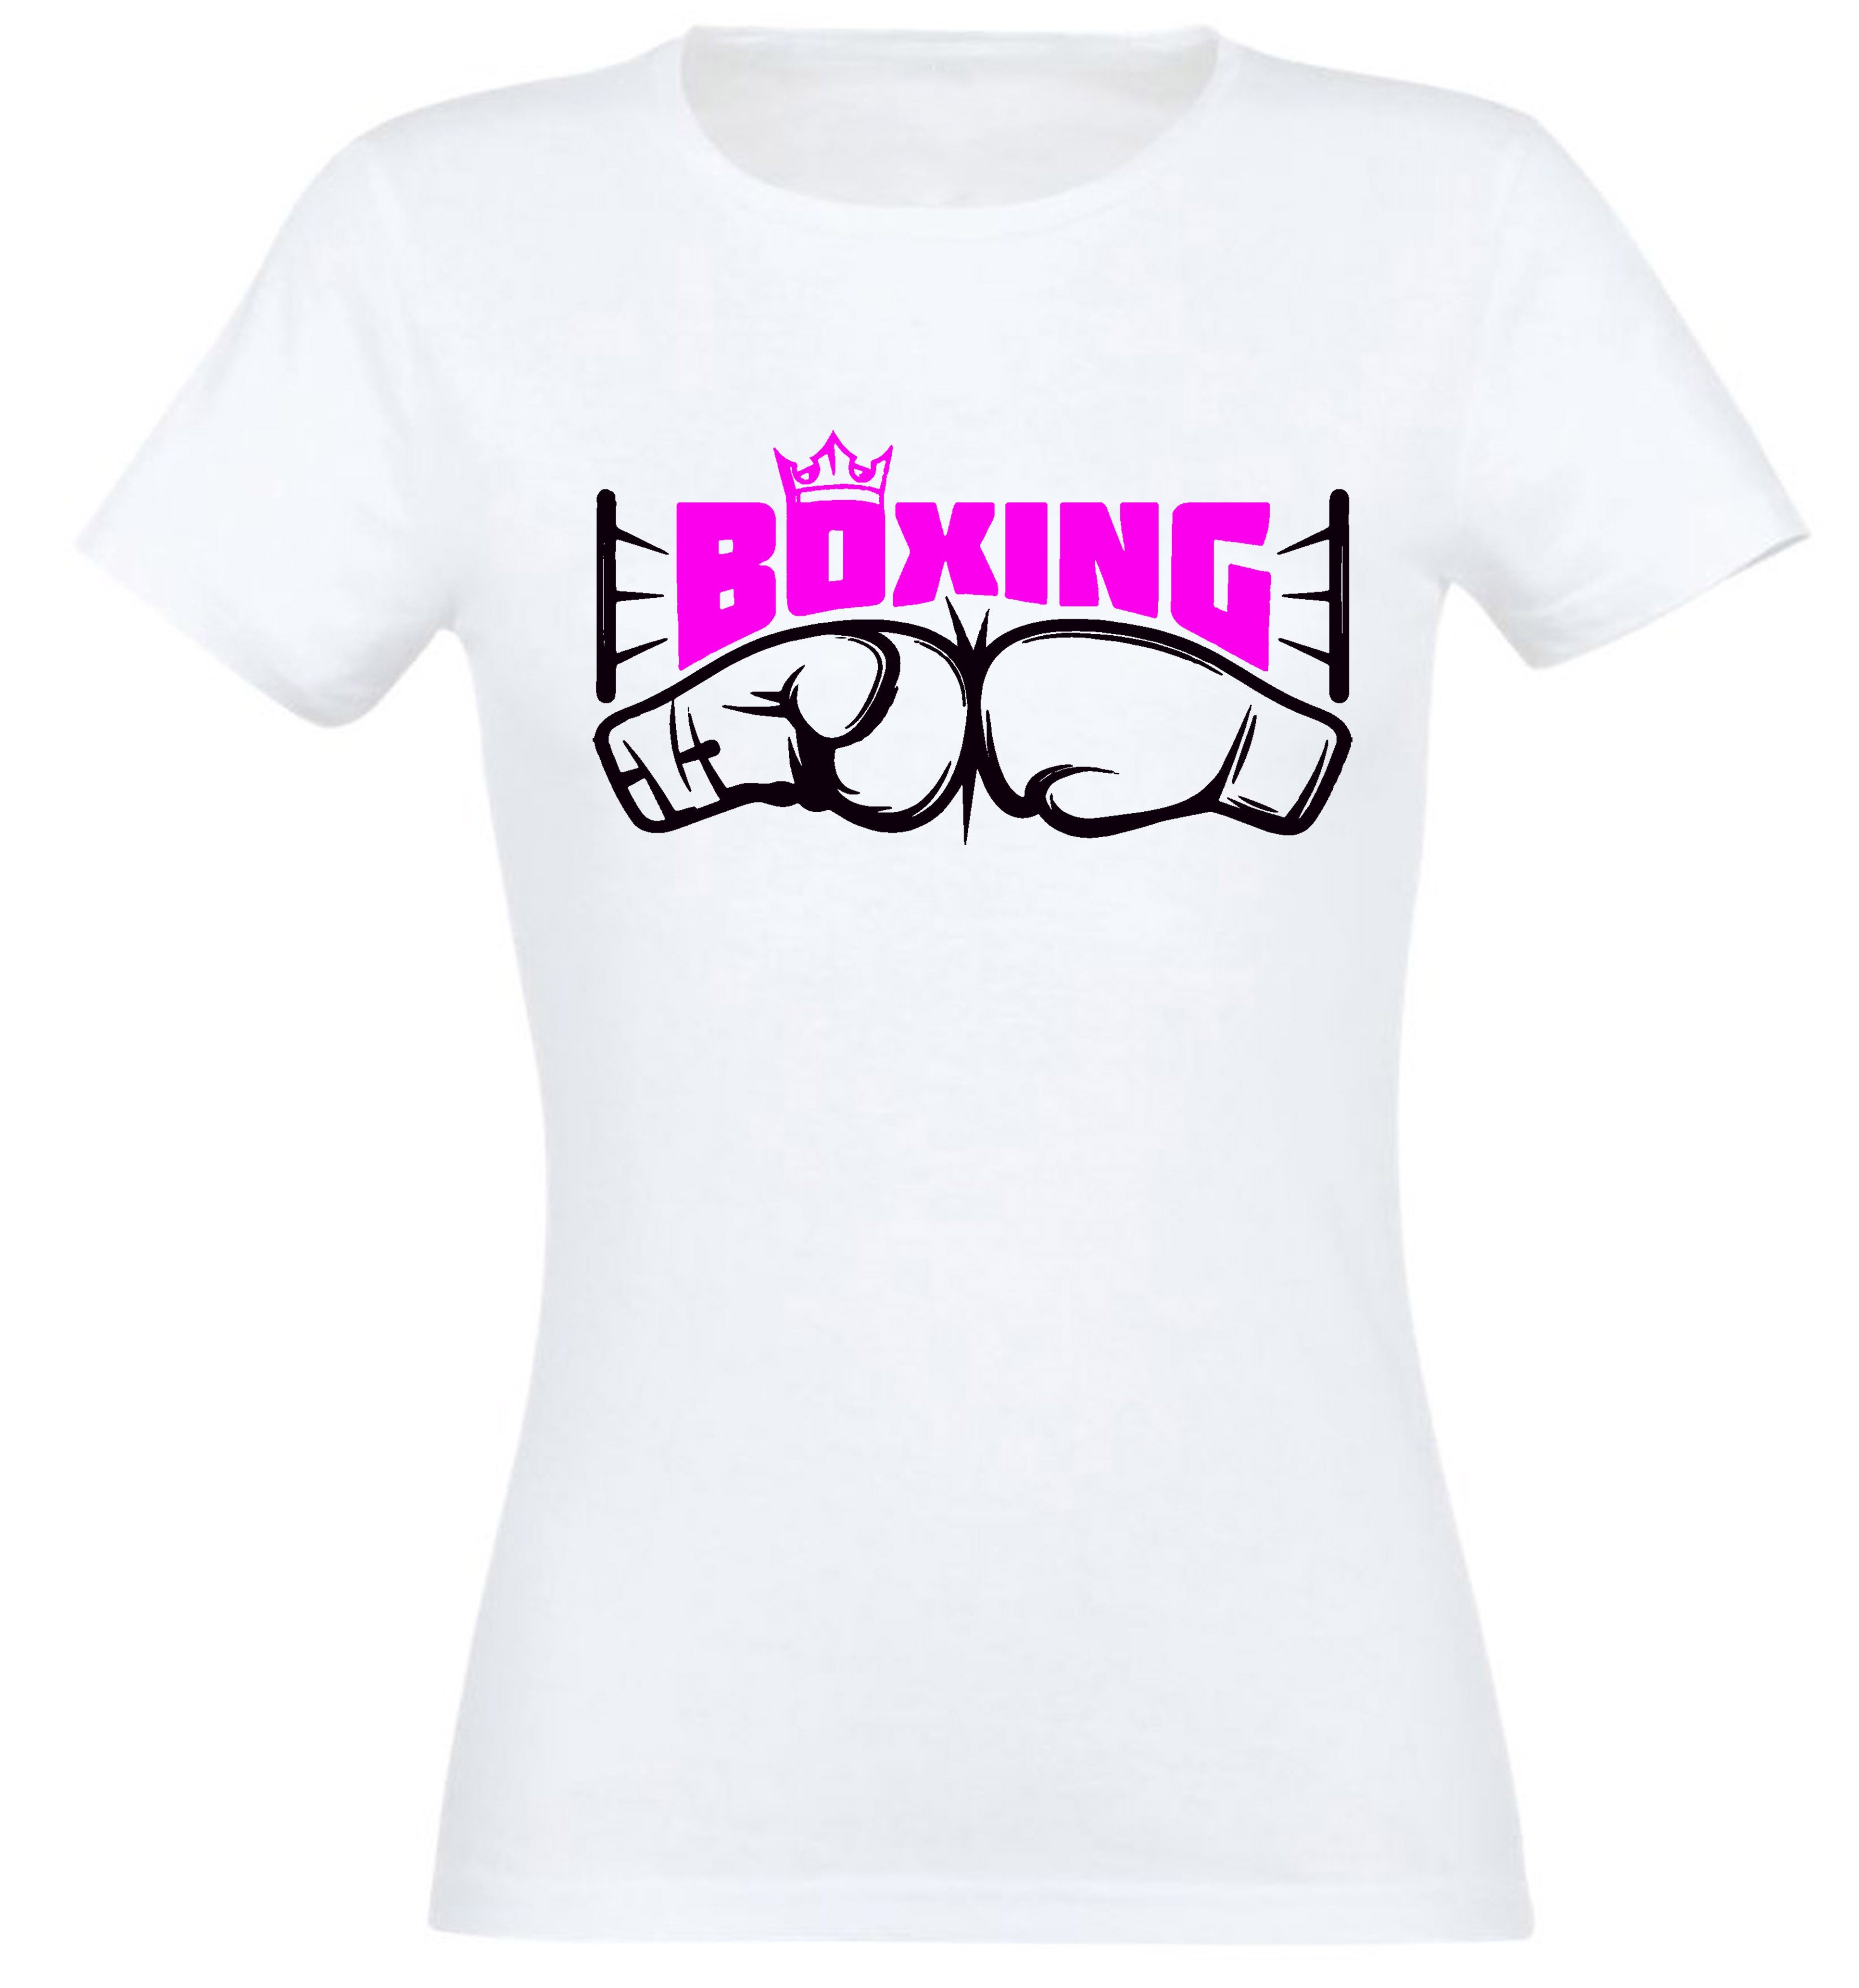 Boxen WeißPink Boxsport Damen Trainingsshirt T-Shirt Kampfsport Sommermode Banco Baumwolle